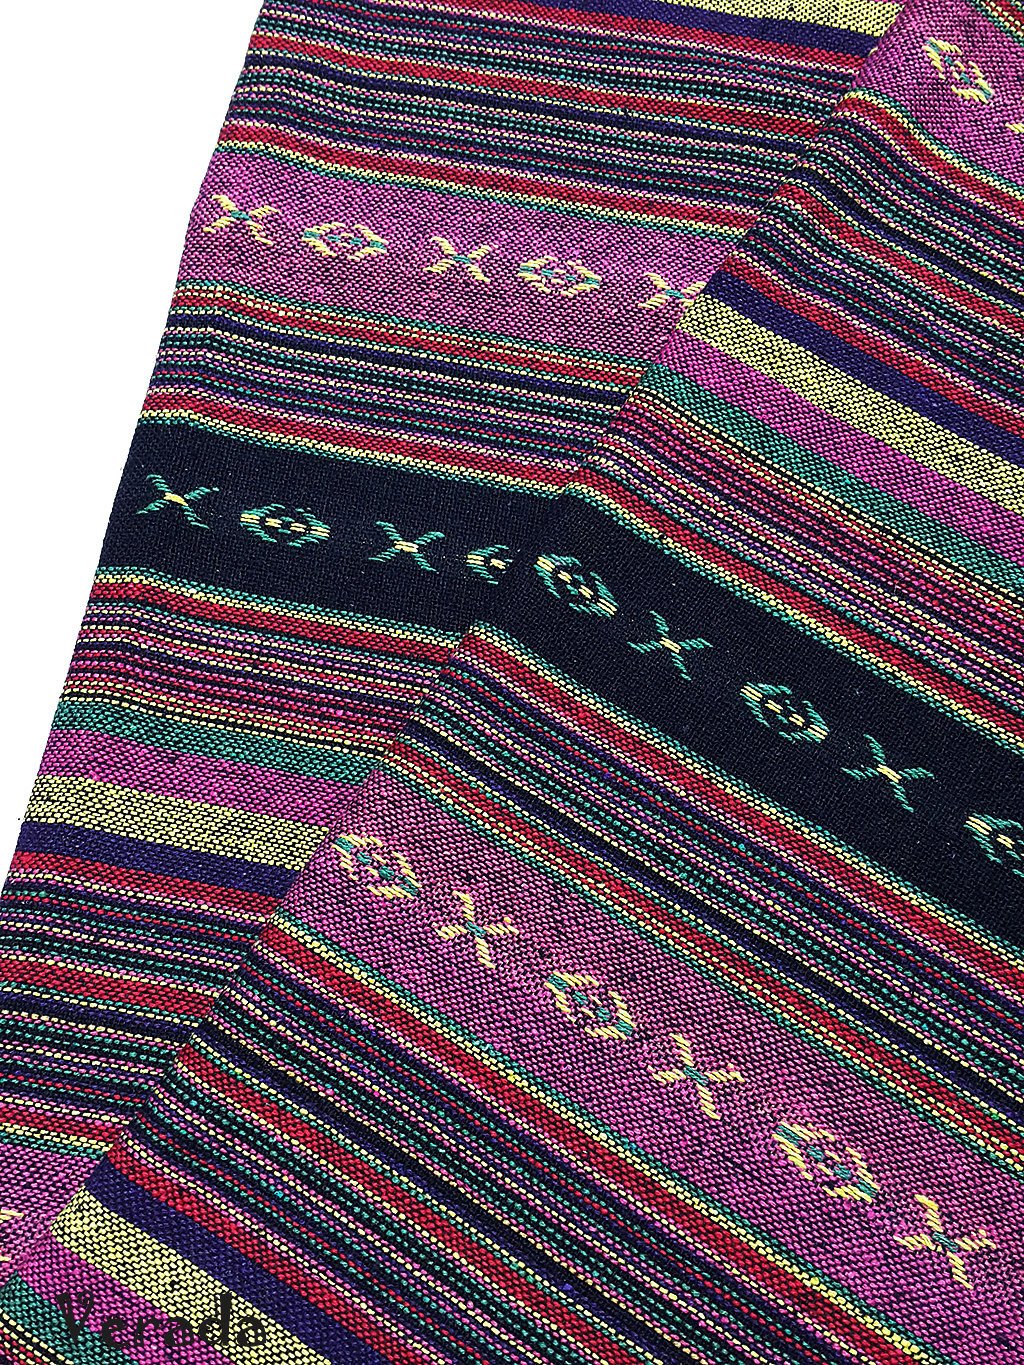 Thai Woven Cotton Tribal Fabric Textile 1/2 yard (WF108)